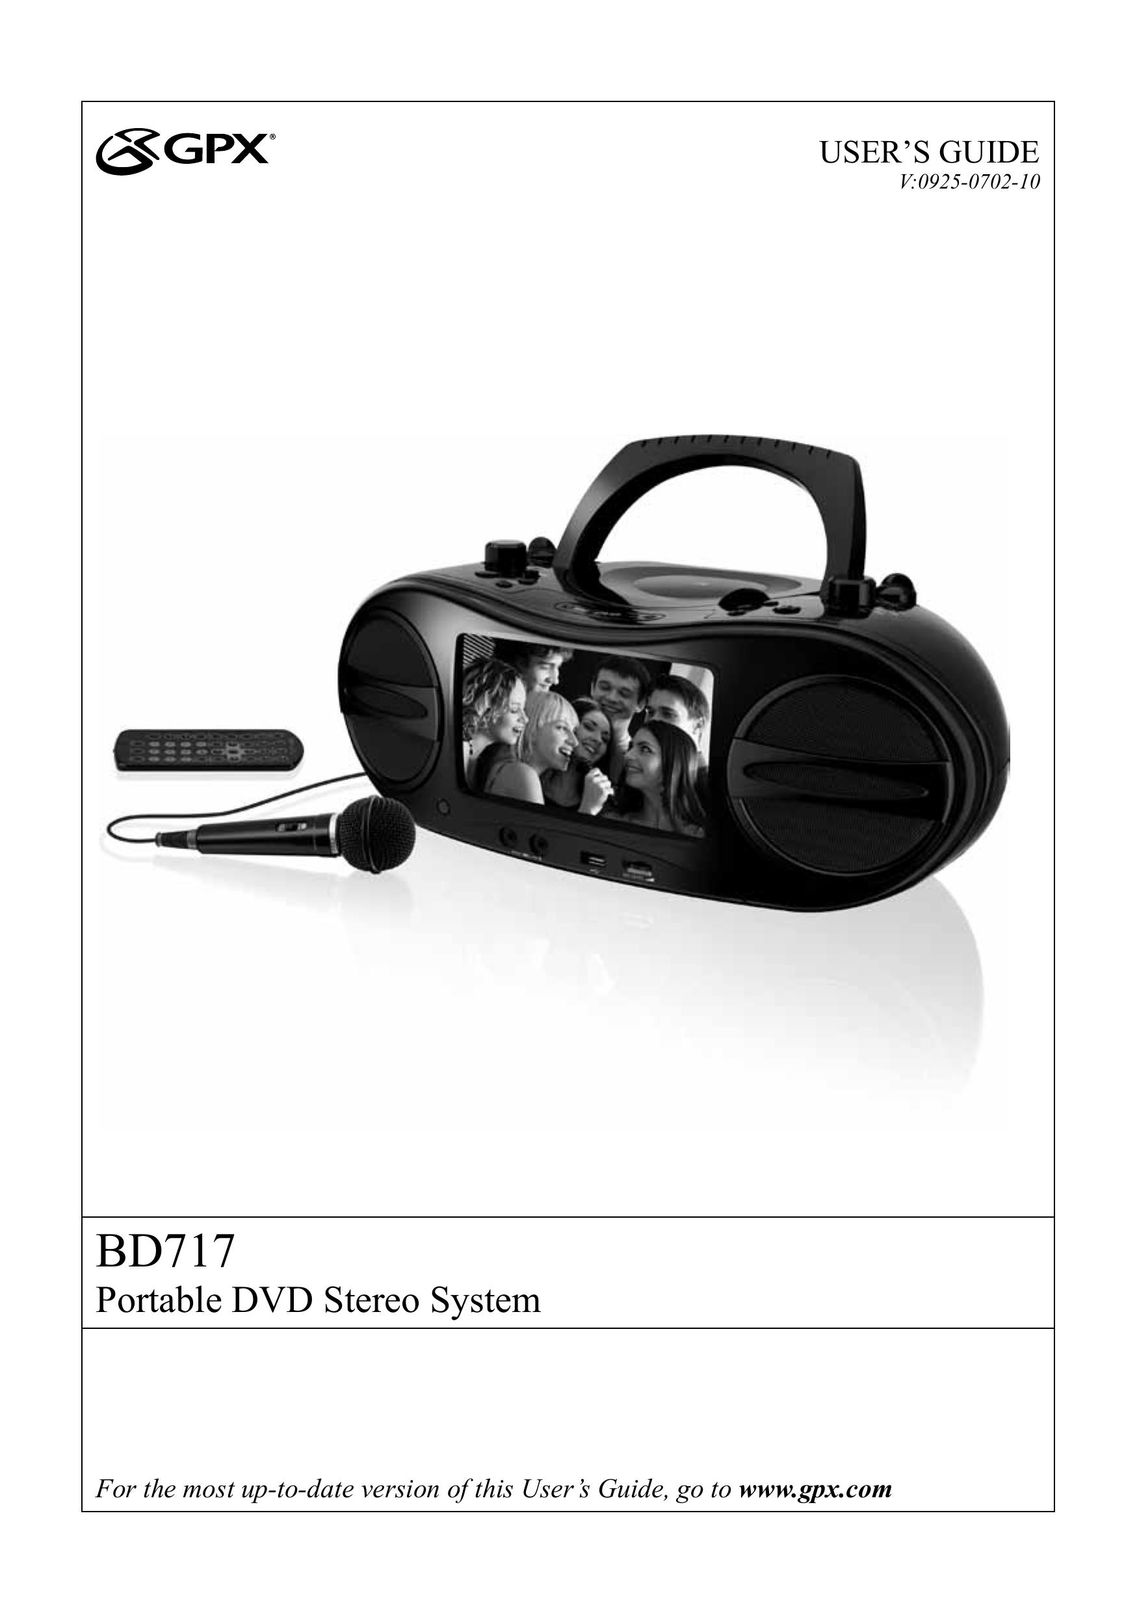 GPX BD717 Portable DVD Player User Manual